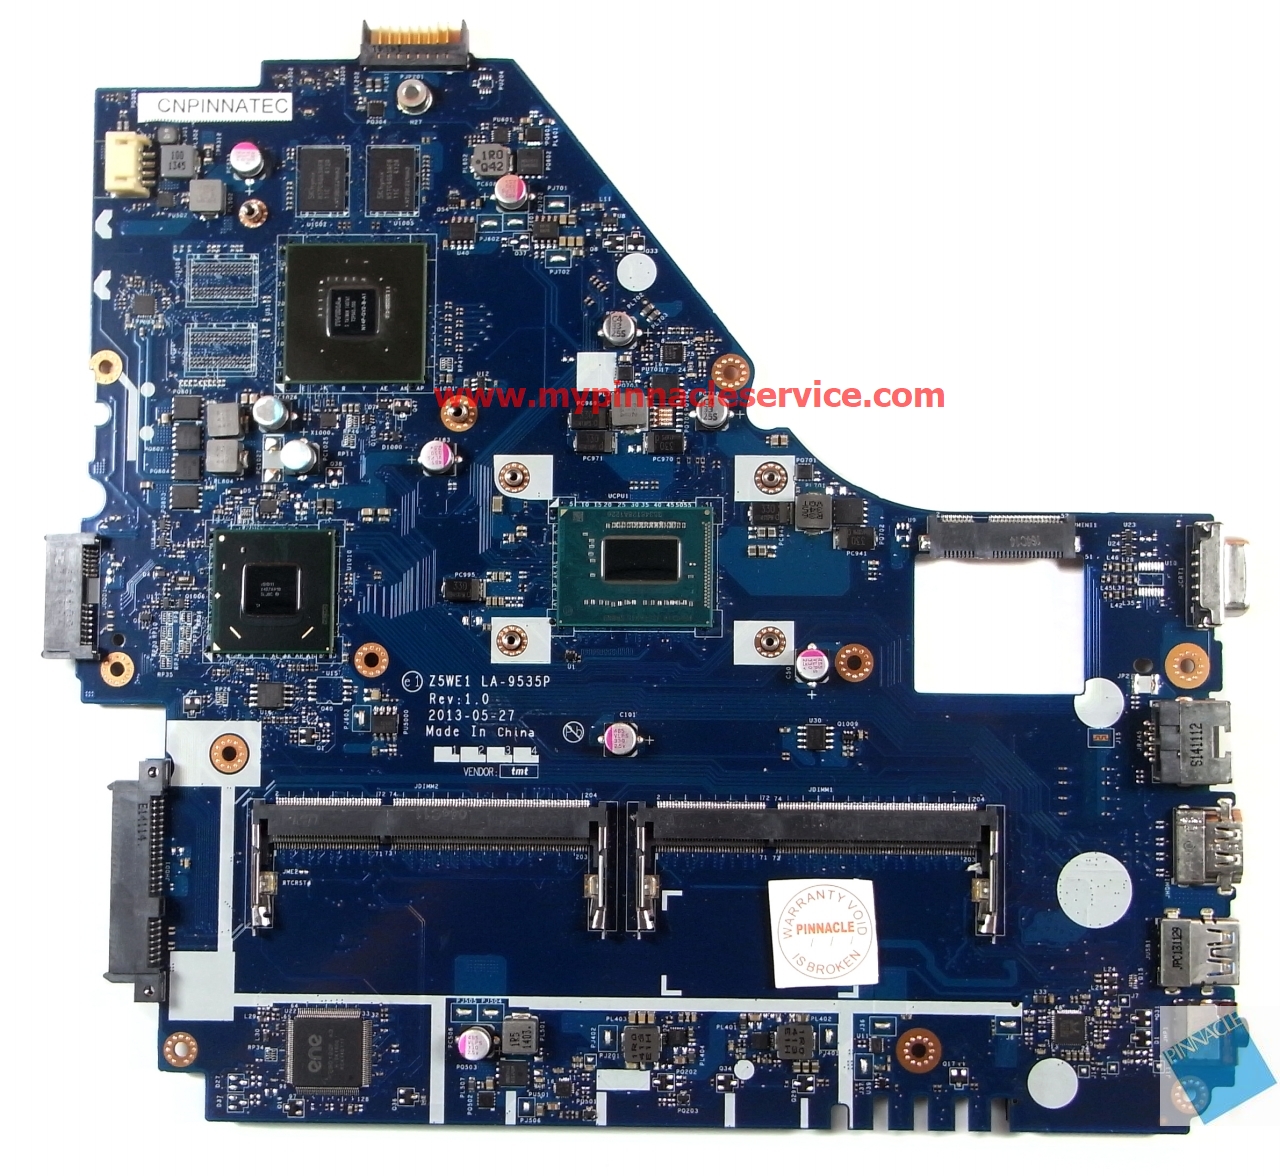 nbmes11001-motherboard-for-acer-aspire-e1-570-e1-570g-la-9535p-i3-3217u-gt740m-r0013252.jpg